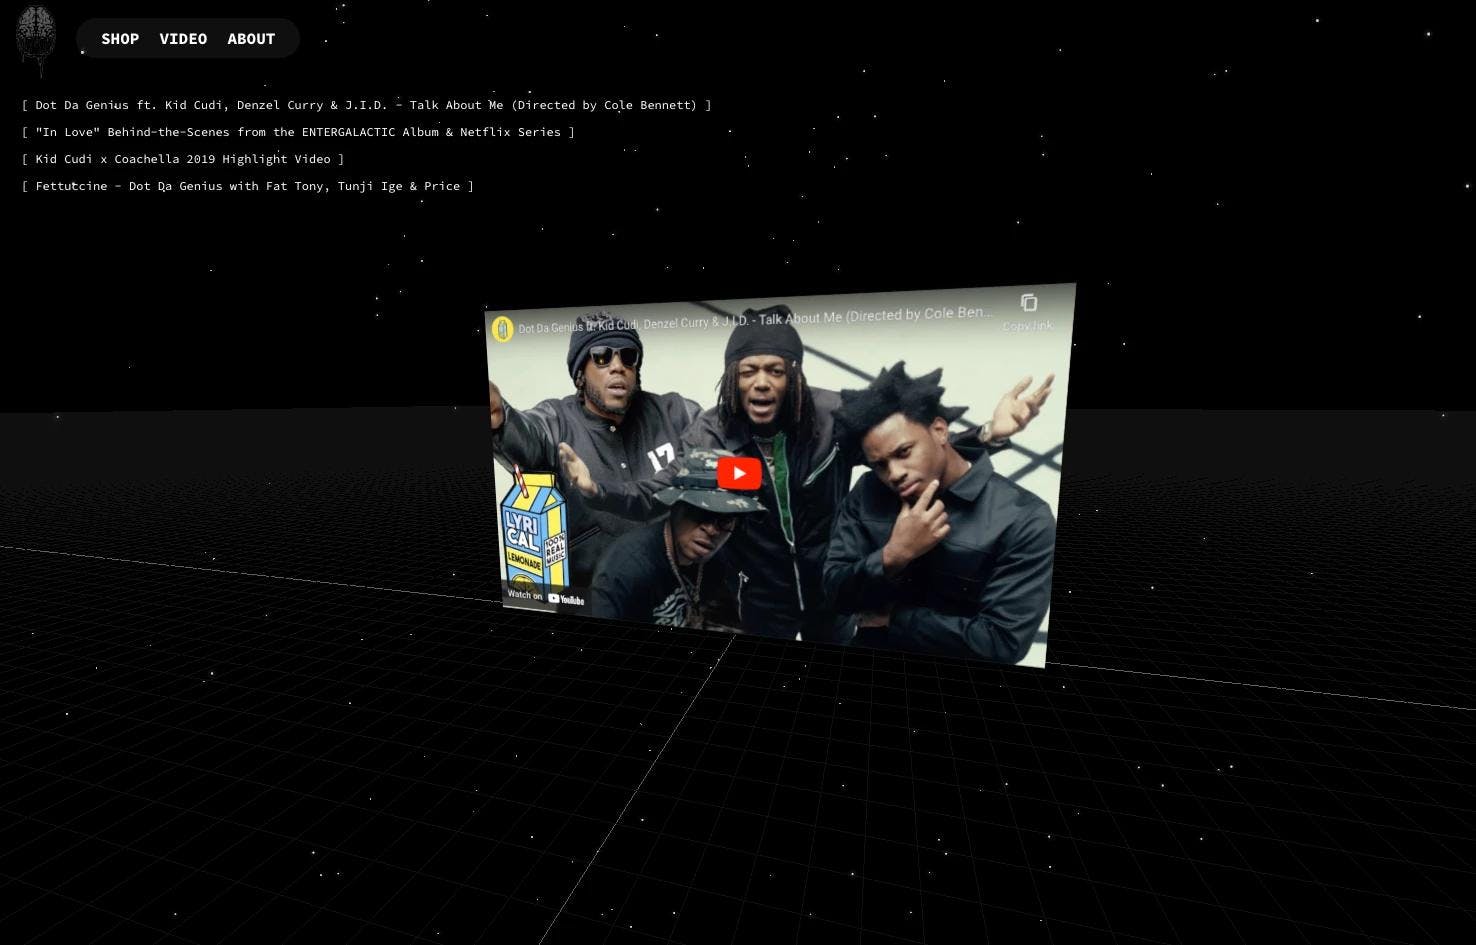 Video page of the Headbanga Muzik website